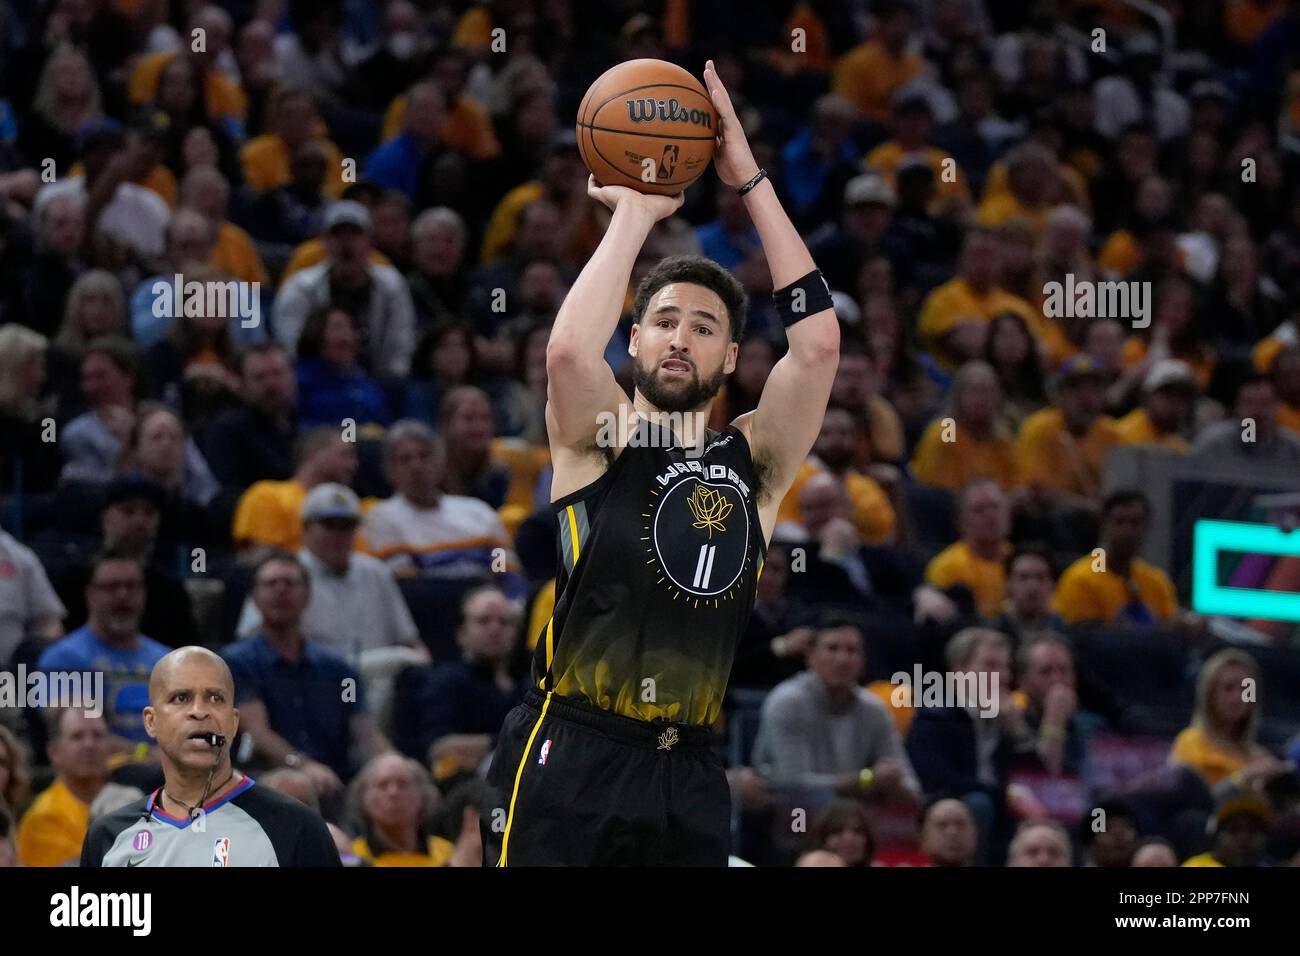 Klay Thompson - Golden State Warriors - 2016 NBA Finals - Game 3 - Game-Worn  Jersey